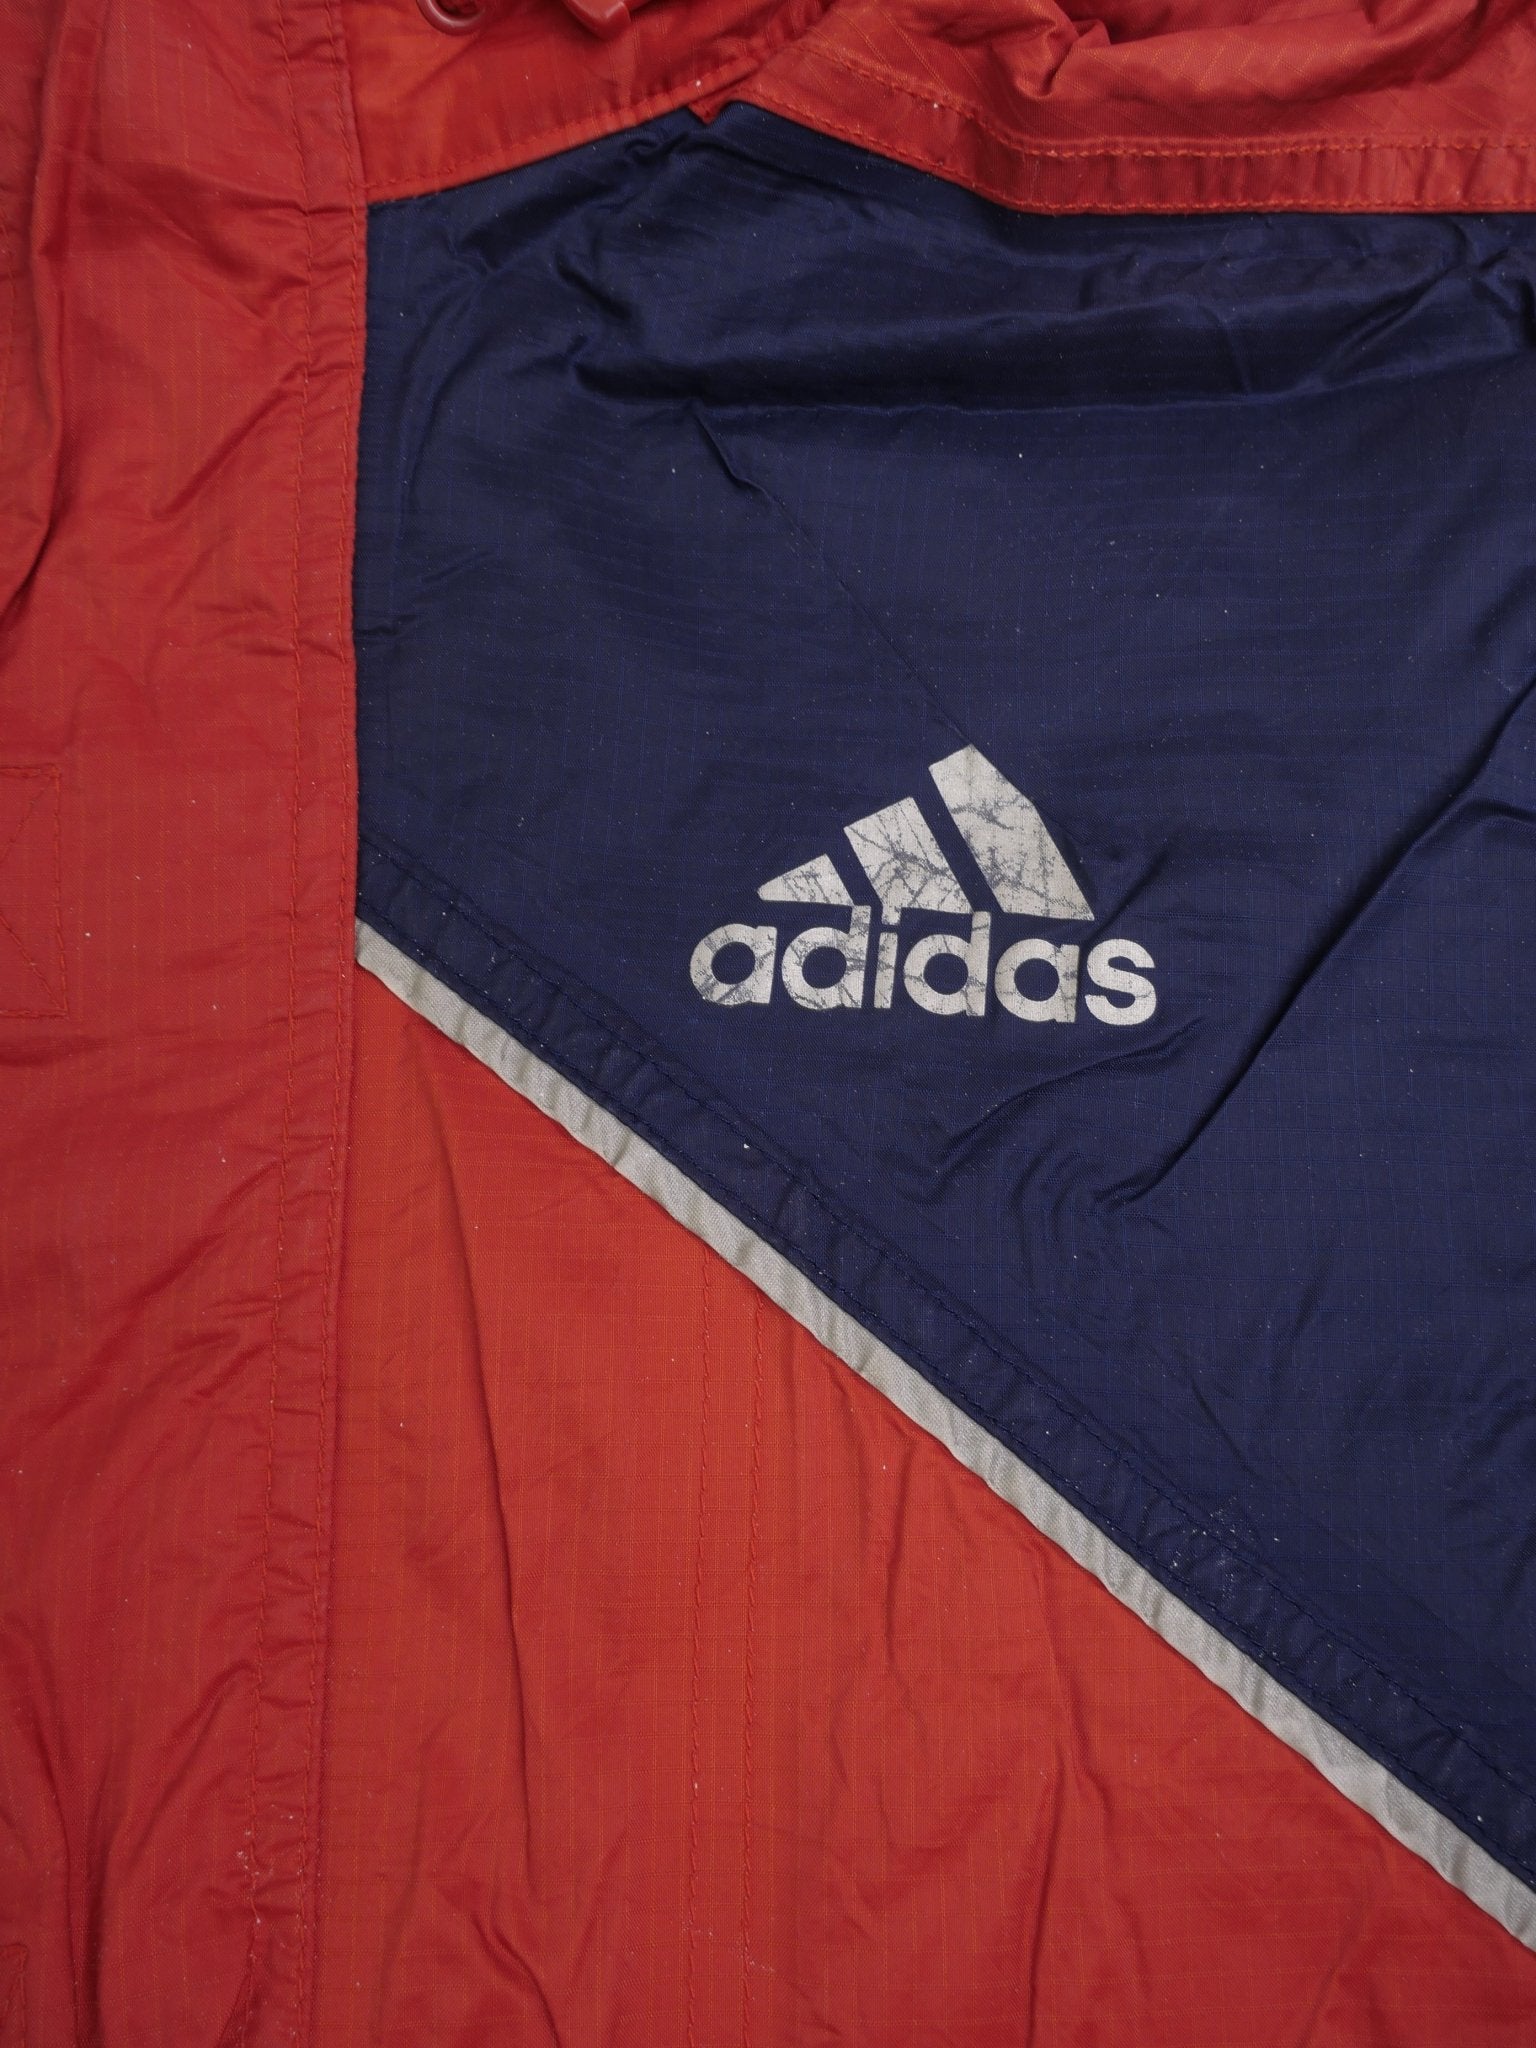 Adidas printed two toned Vintage Track Jacke - Peeces